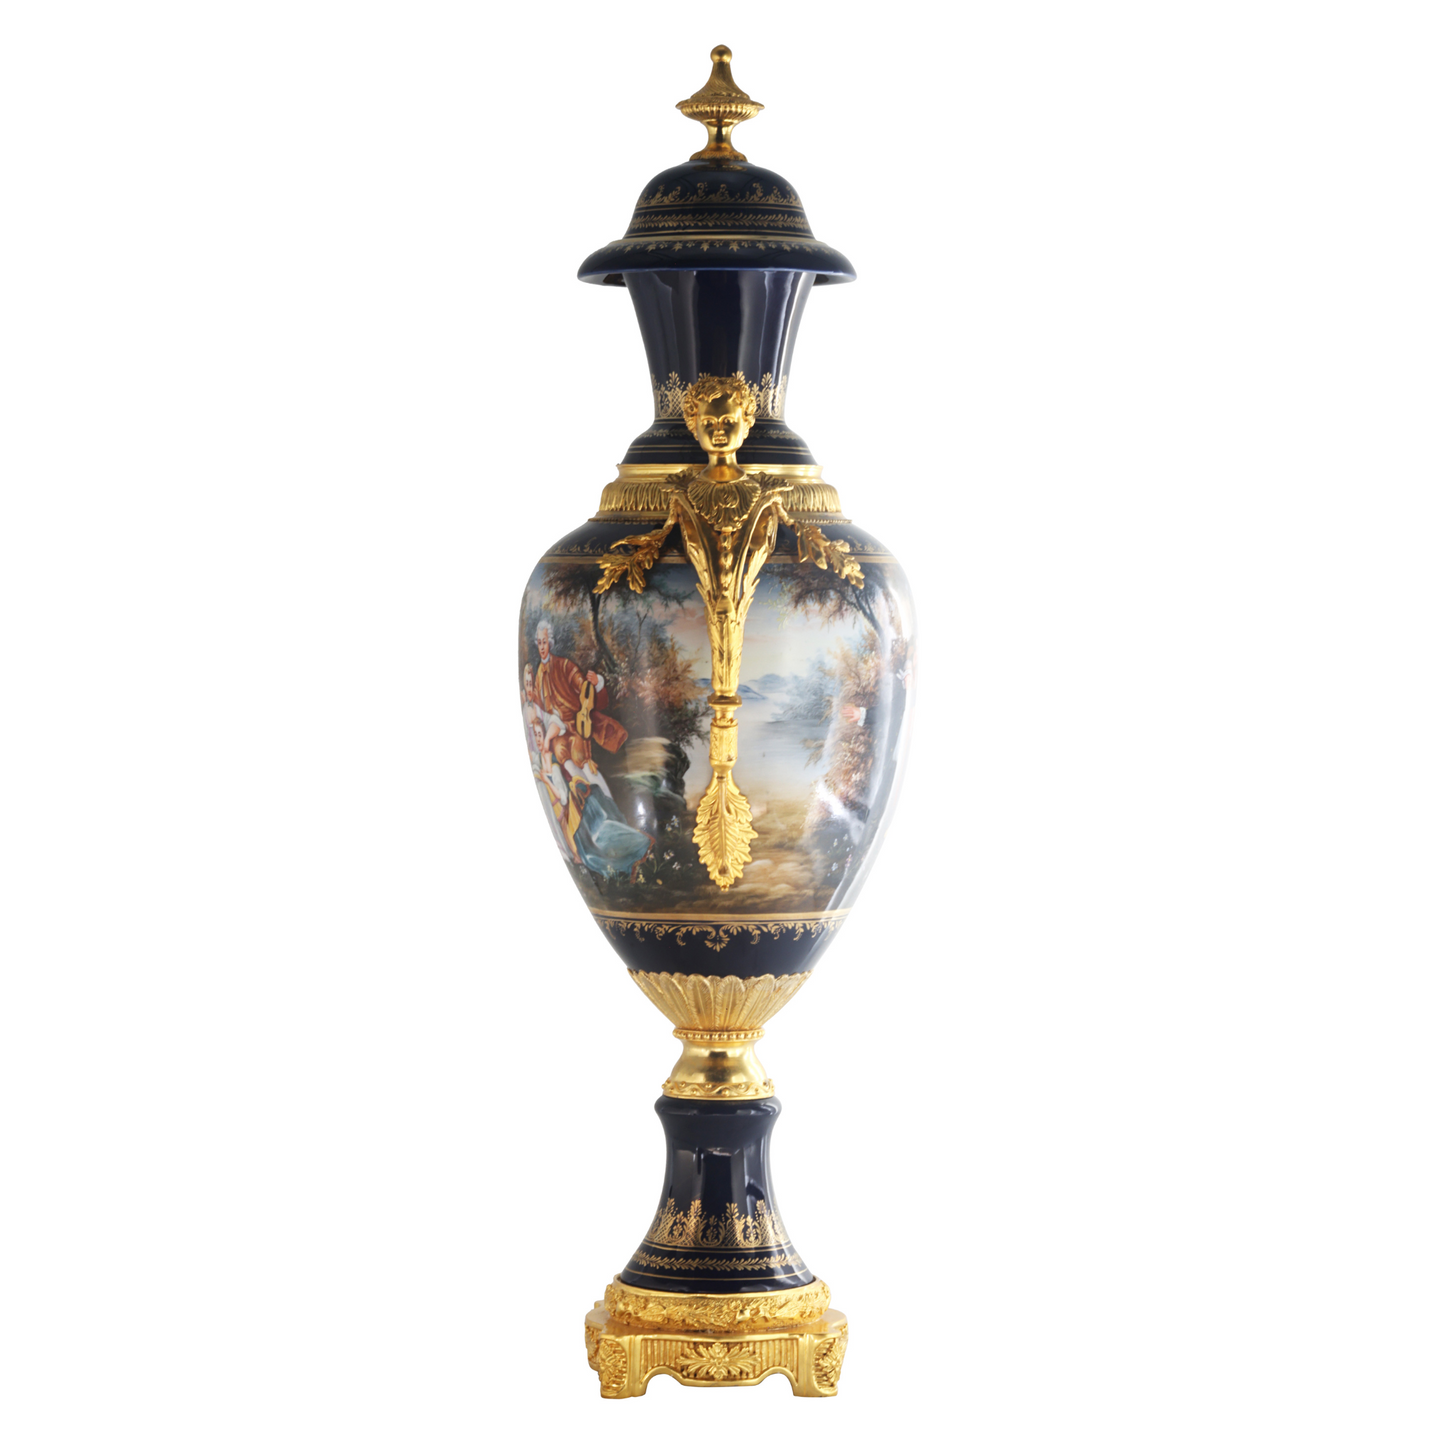 Striking Hand-Painted Porcelain And Bronze Cherub Handle Vase